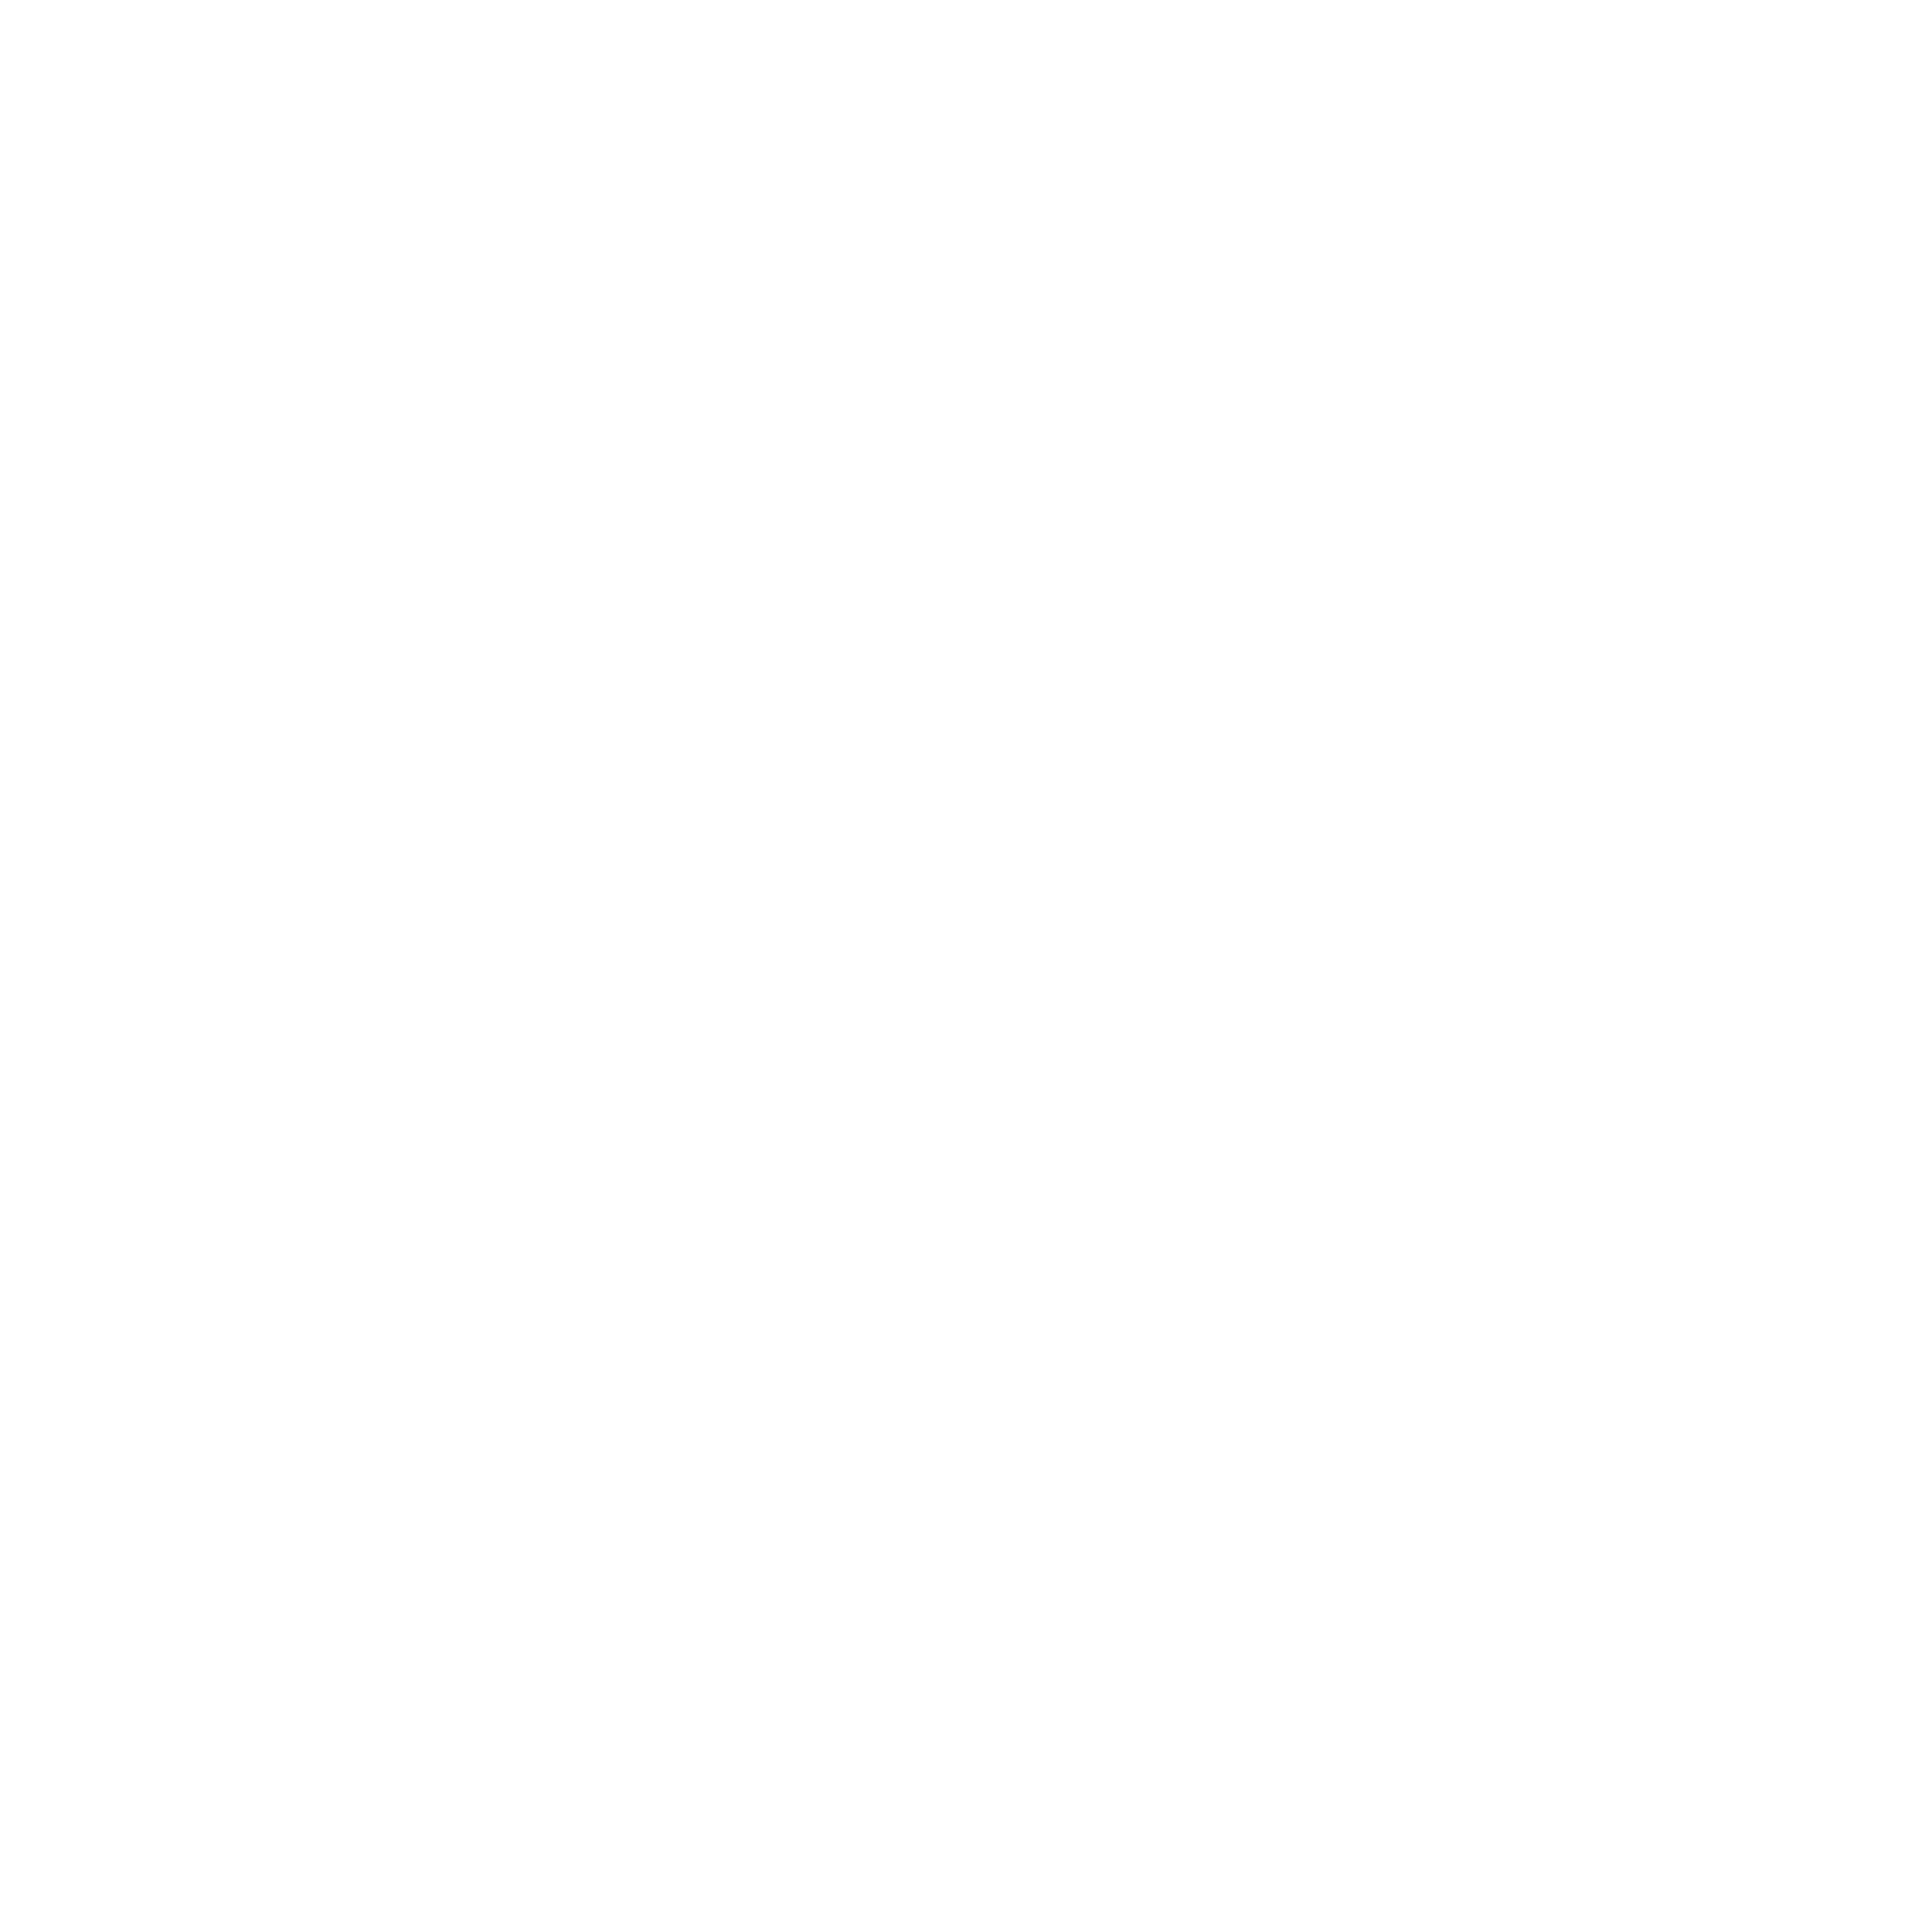 Taurus Astrology sign